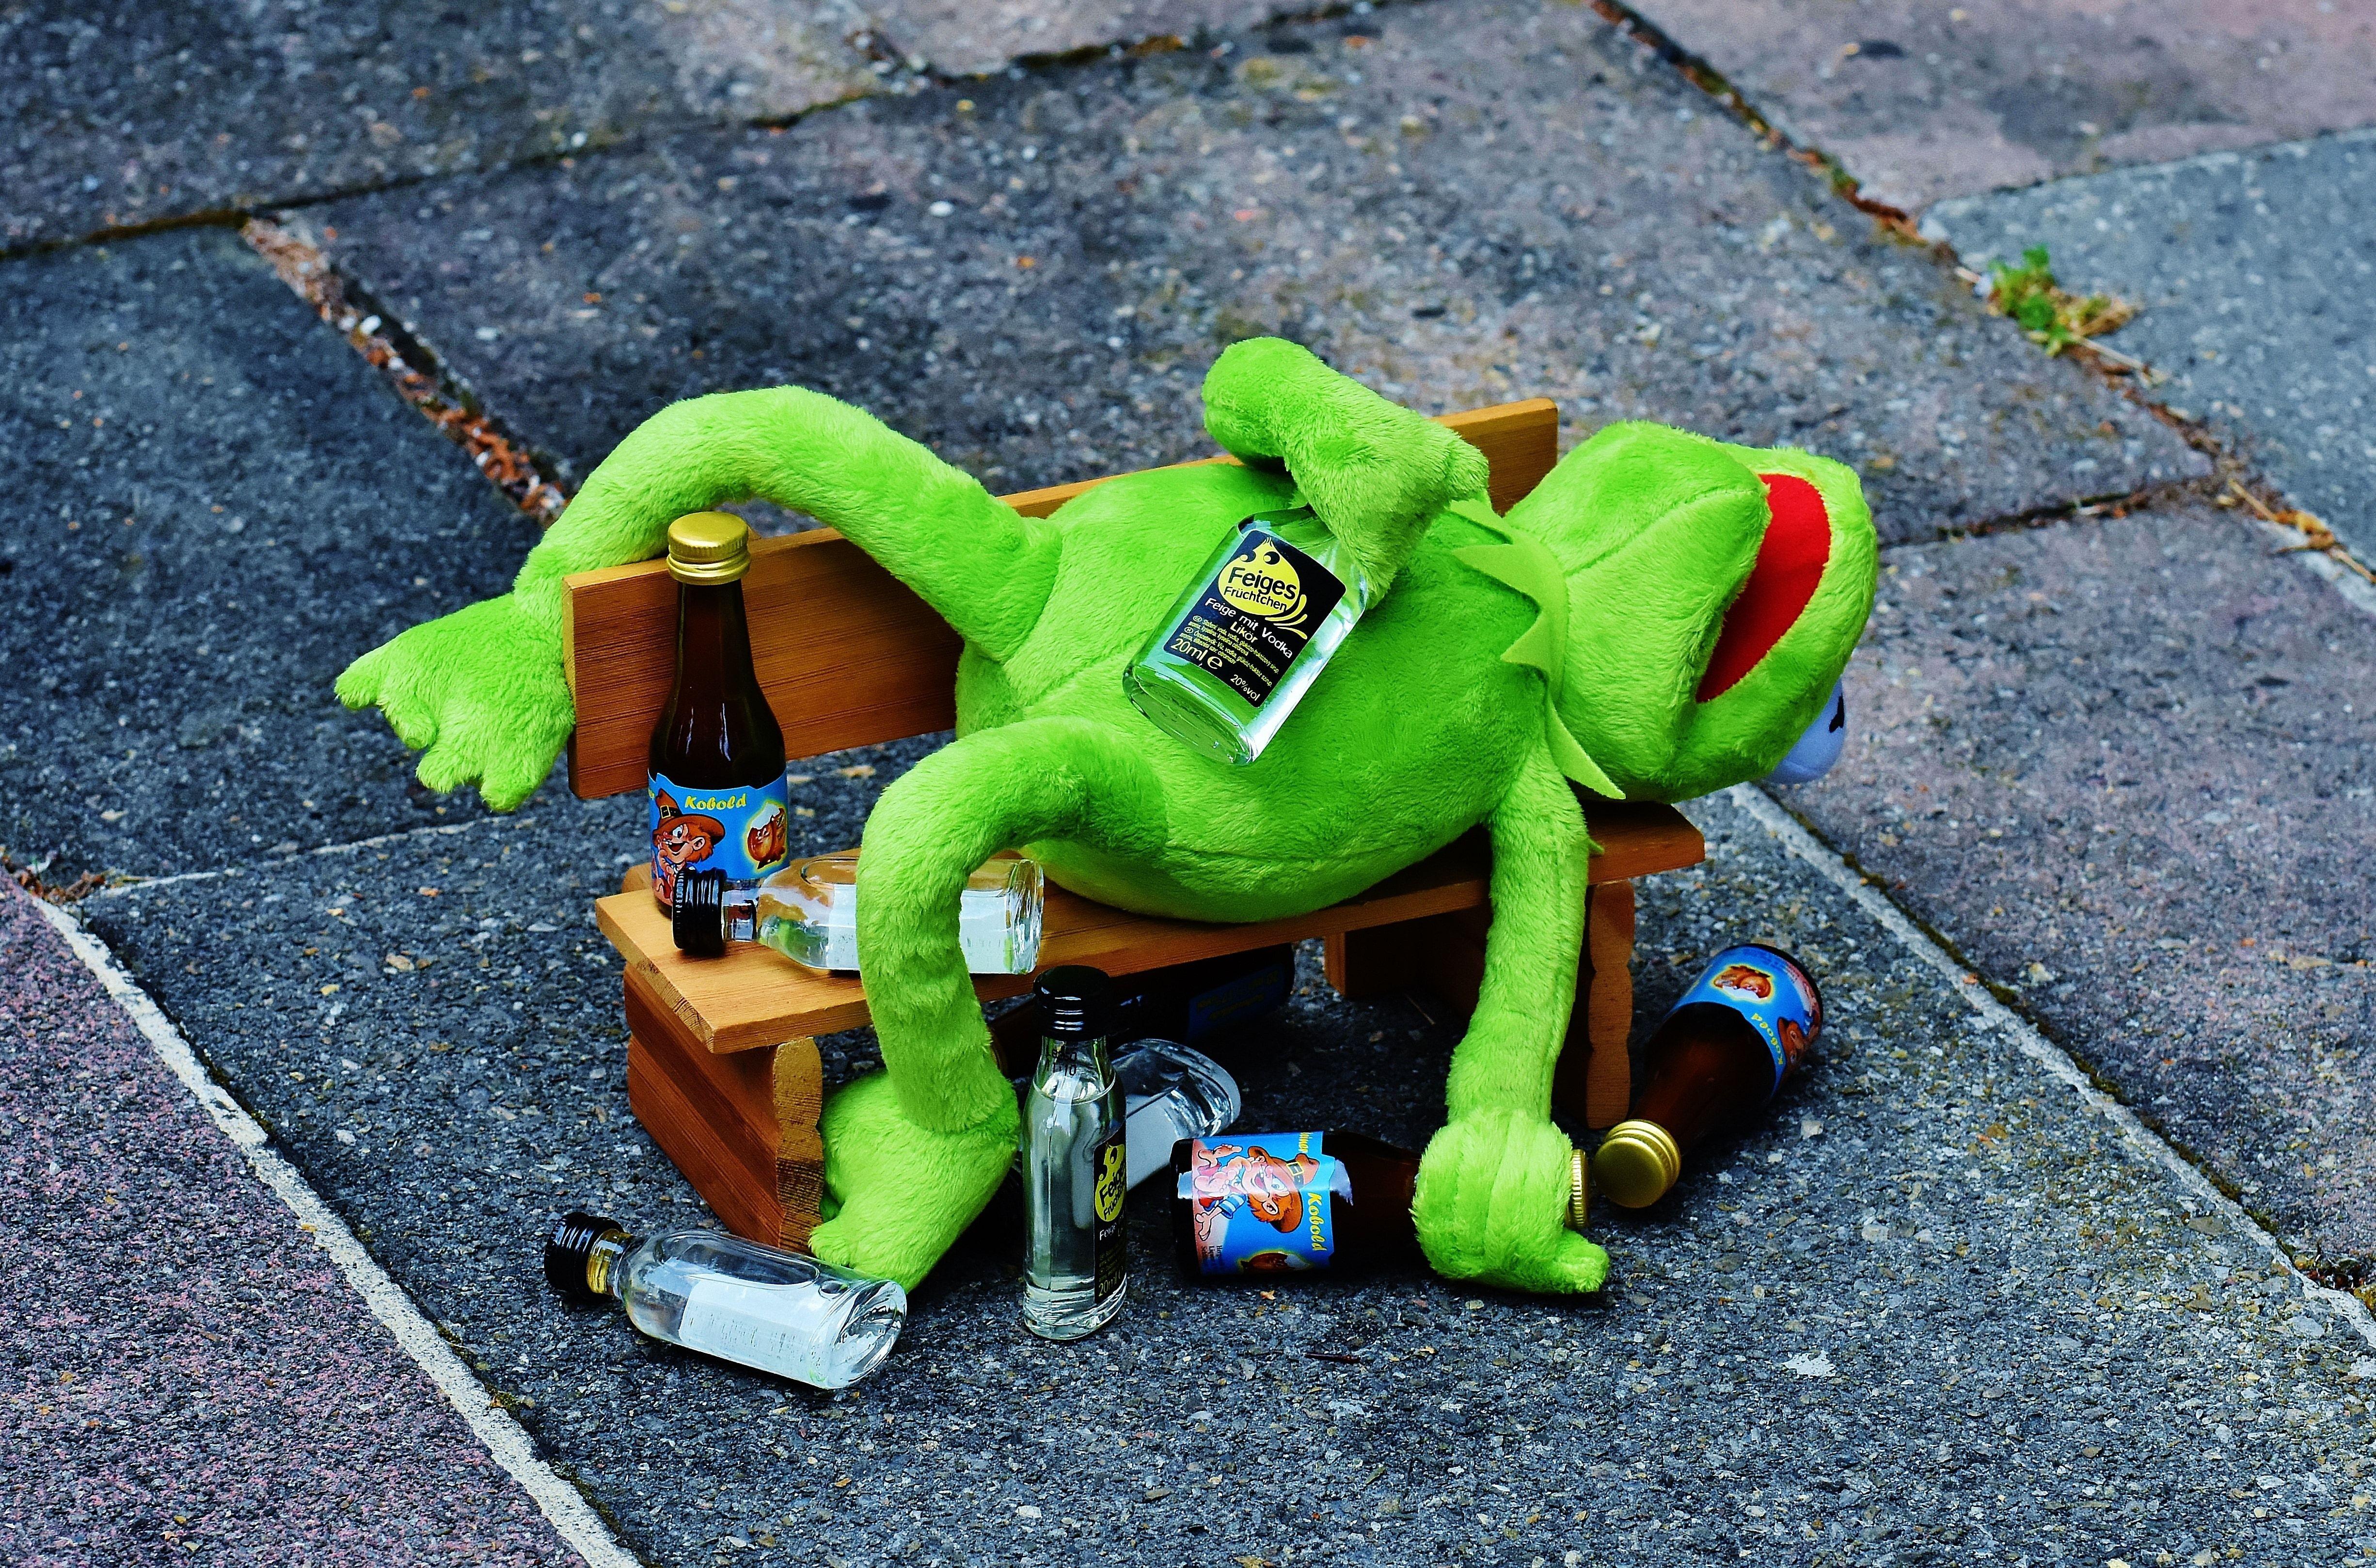 kermit the frog plush toy free image